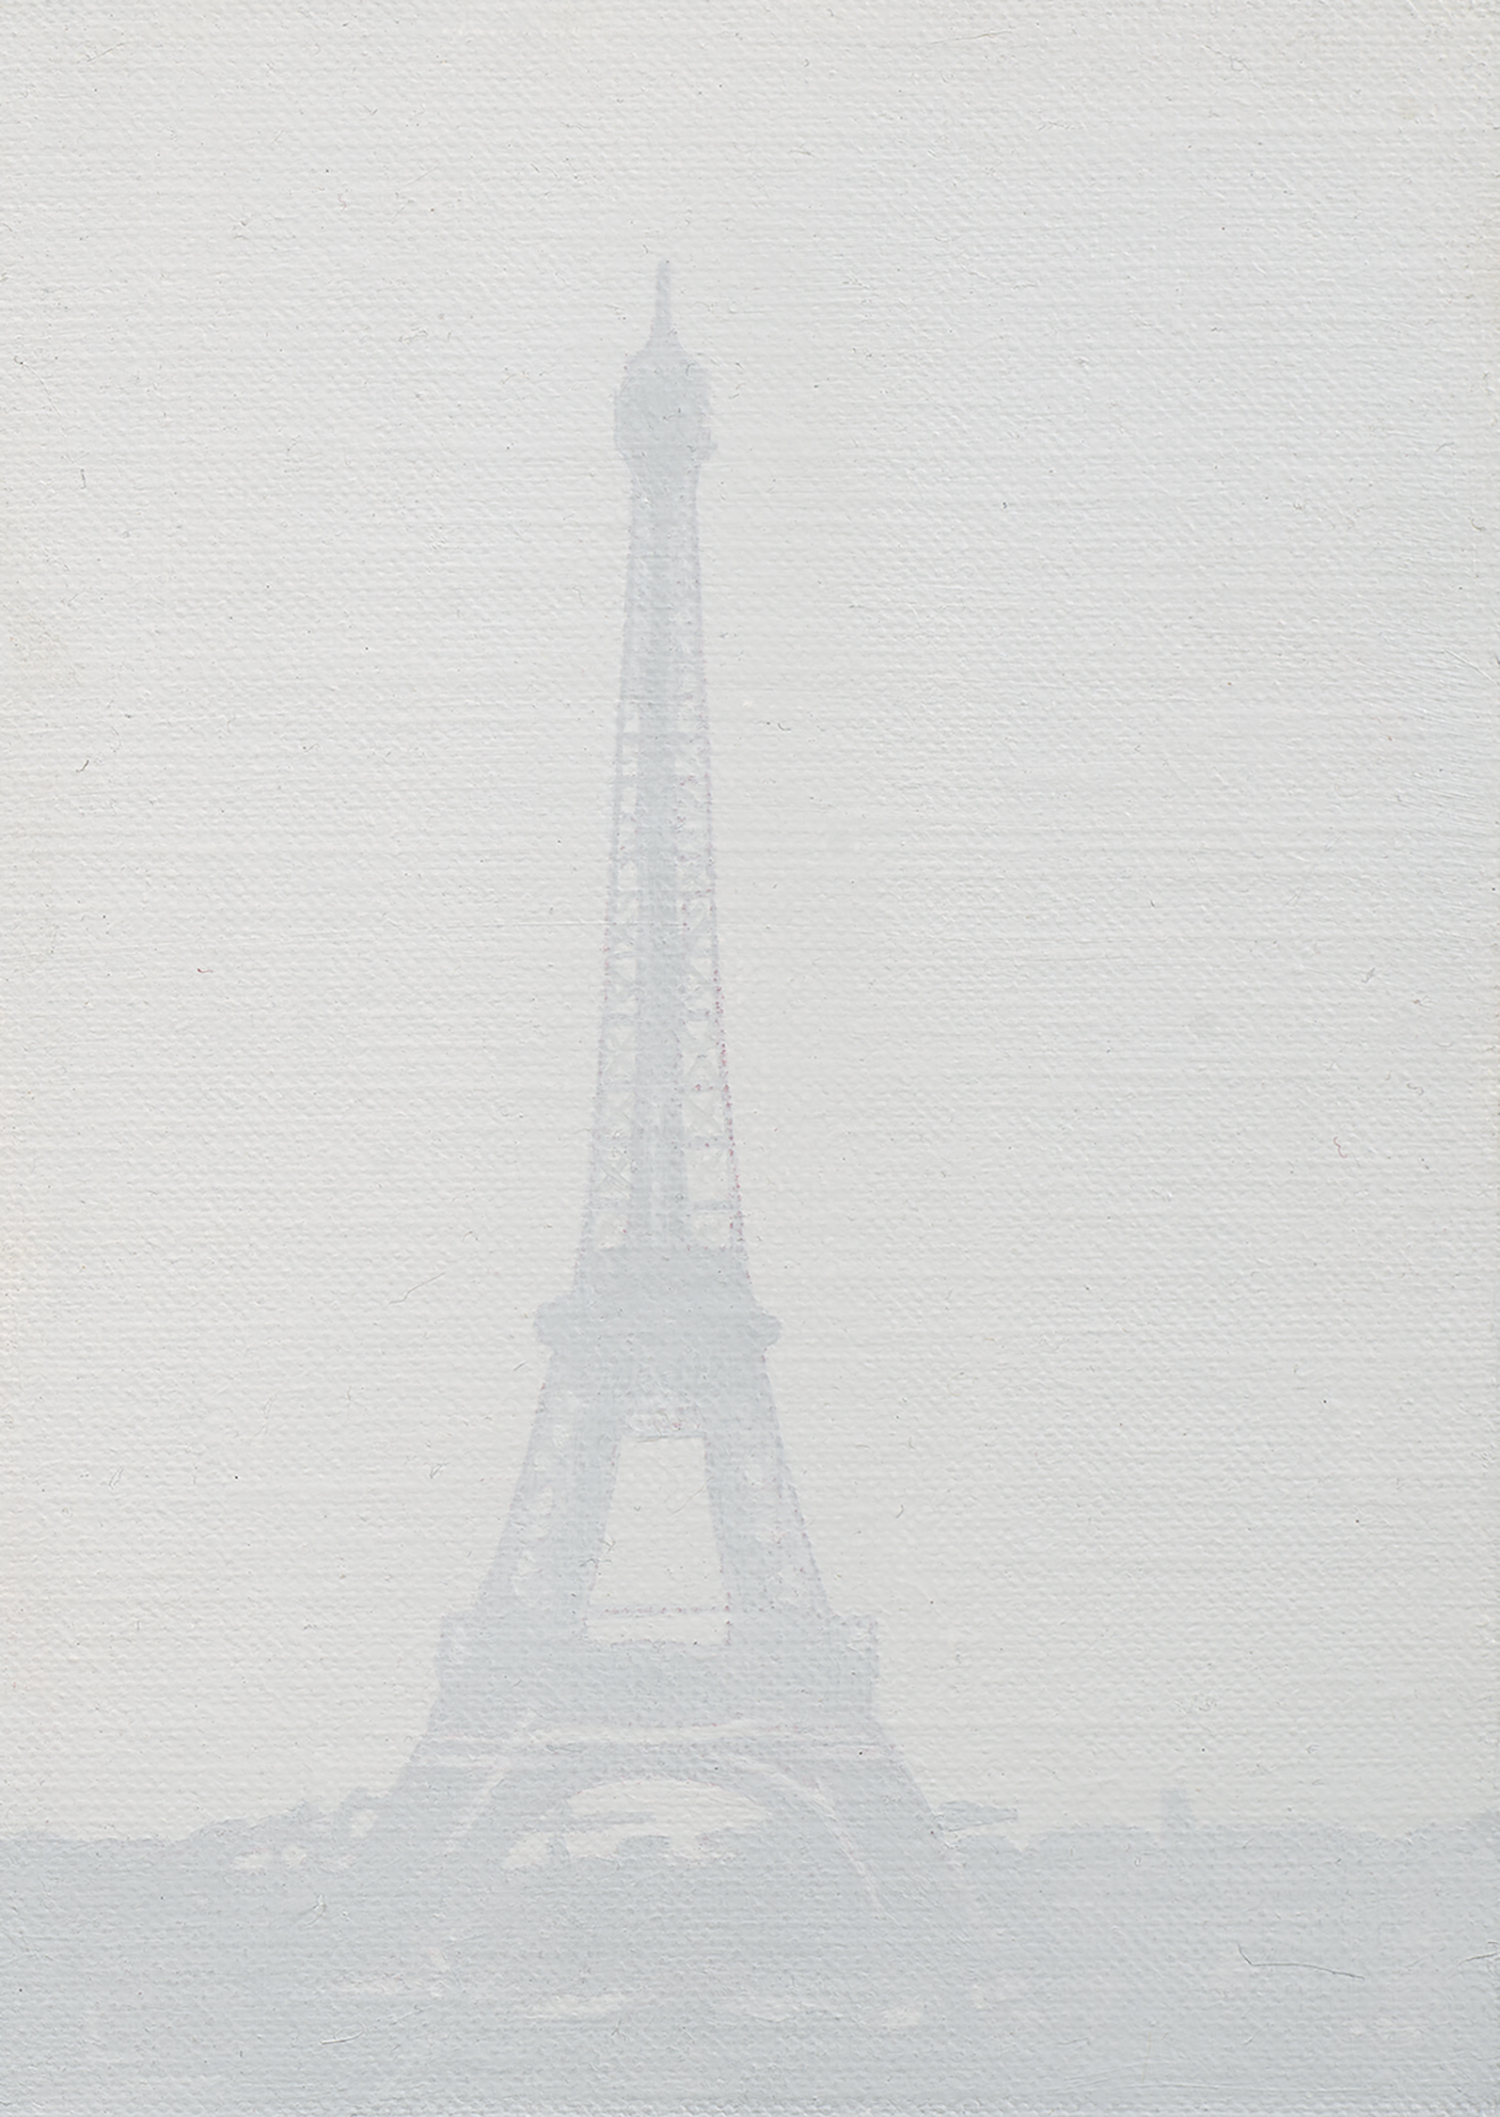 Eiffel Tower (triptych) - Cox, Nigel